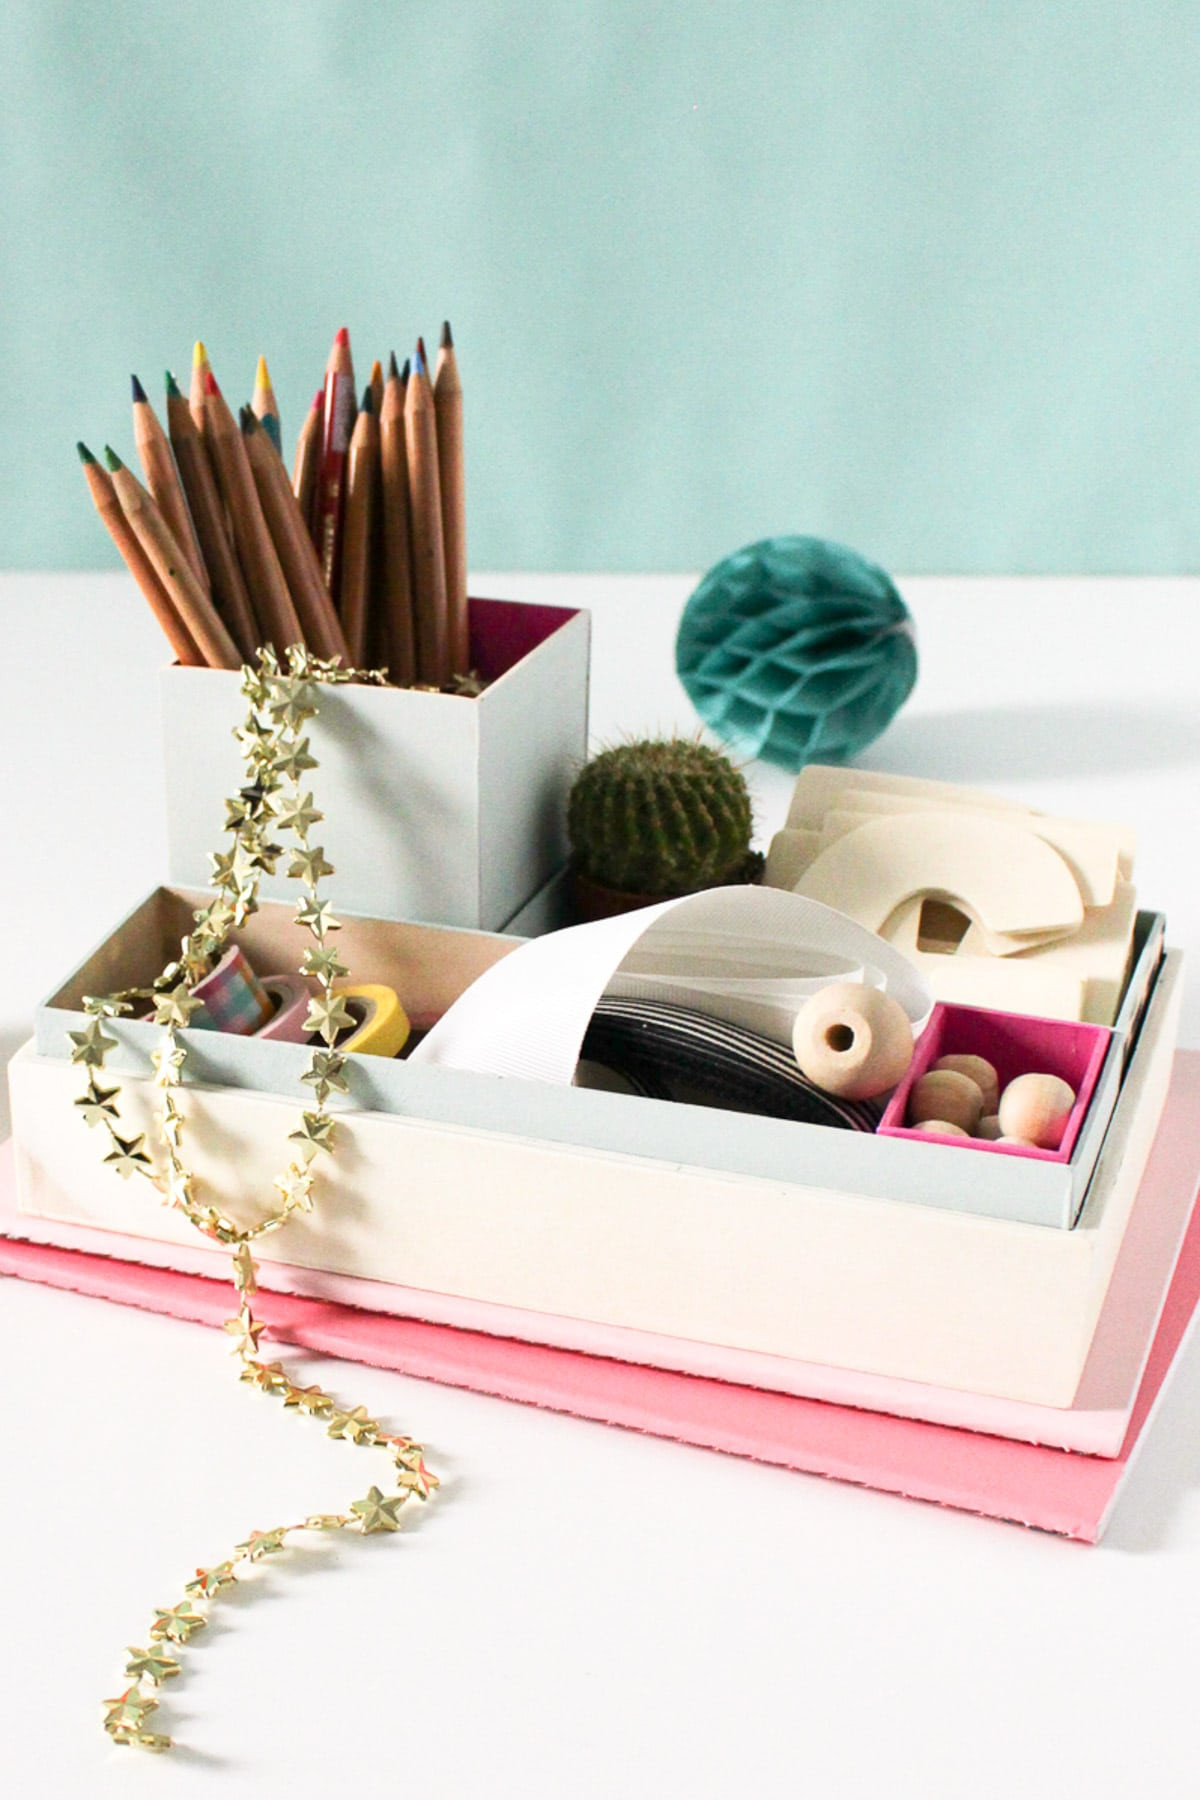 Best ideas about Desk Organizer DIY
. Save or Pin DIY Nesting Desk Organizer Now.